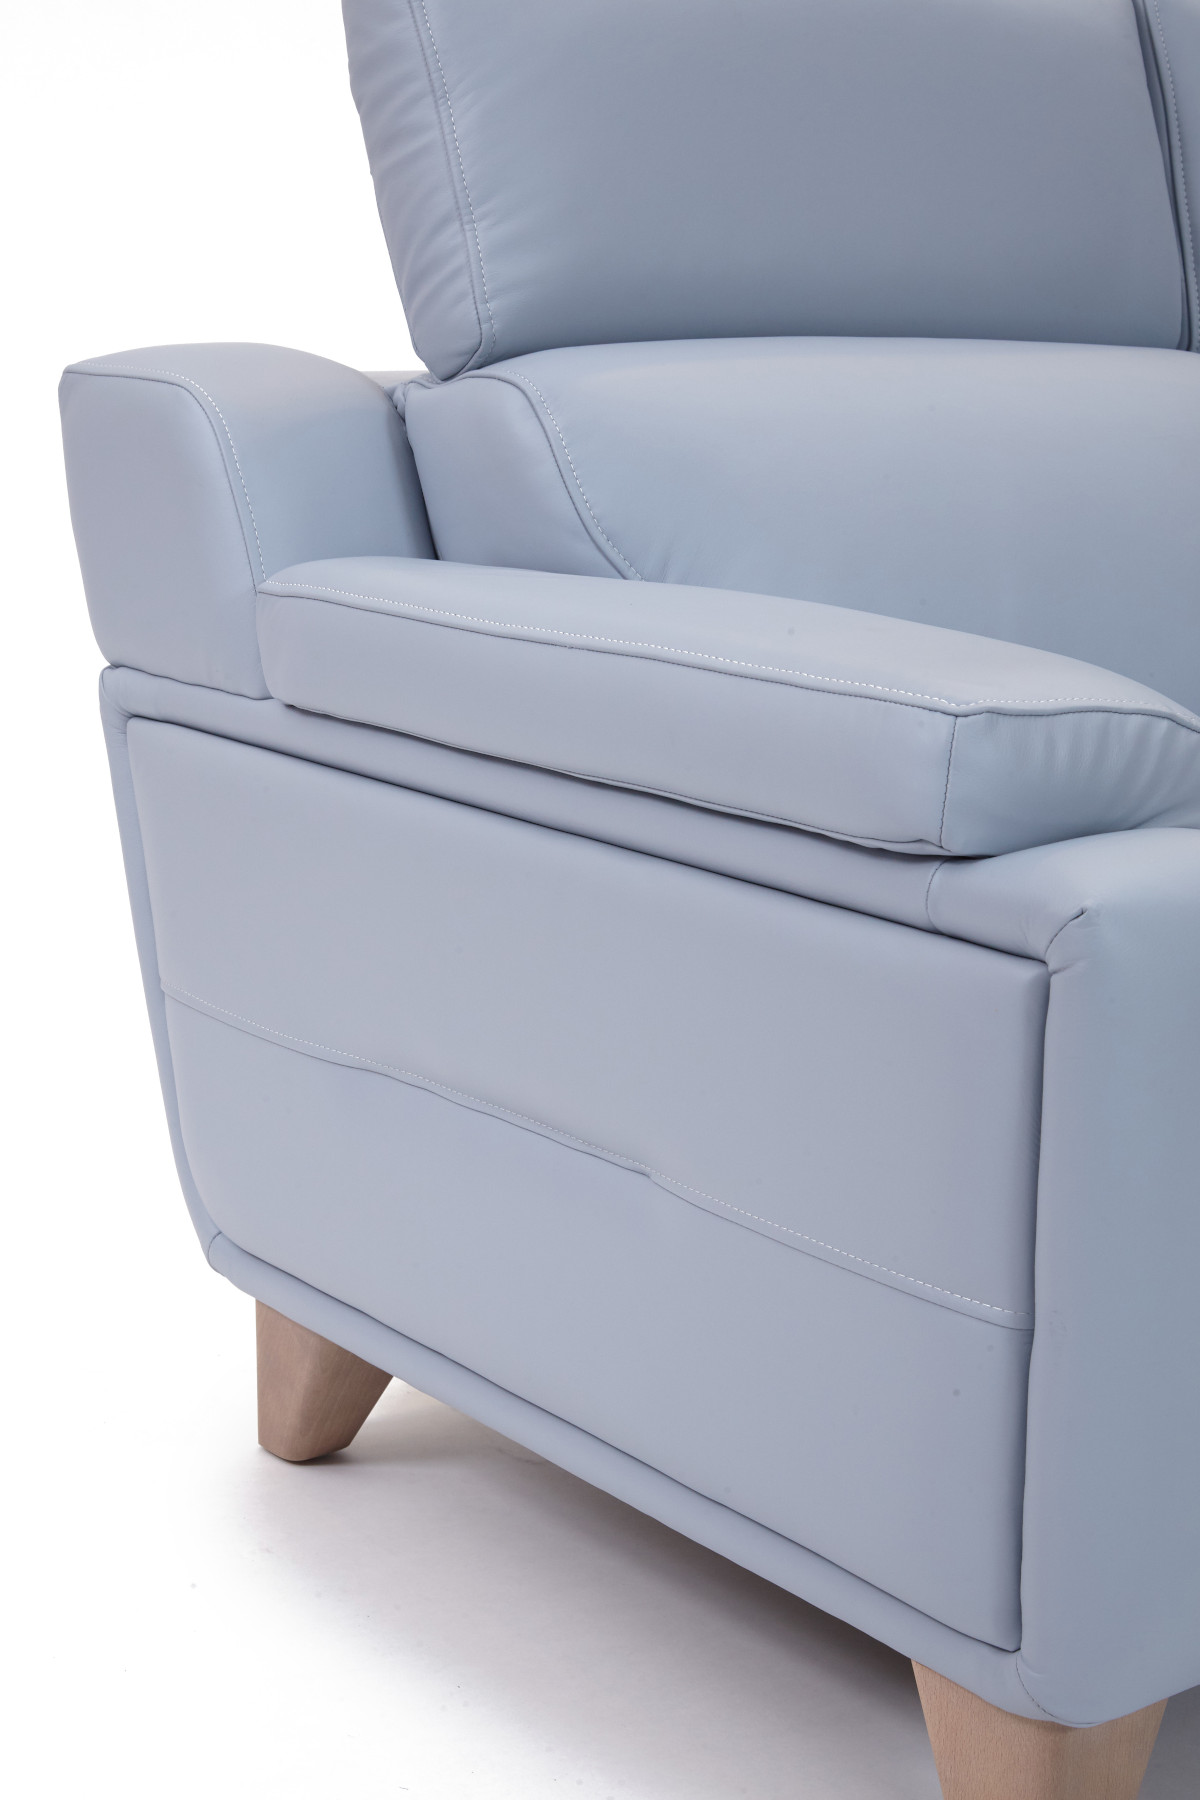 Parker Knoll Design 1701 2 Seater Sofa